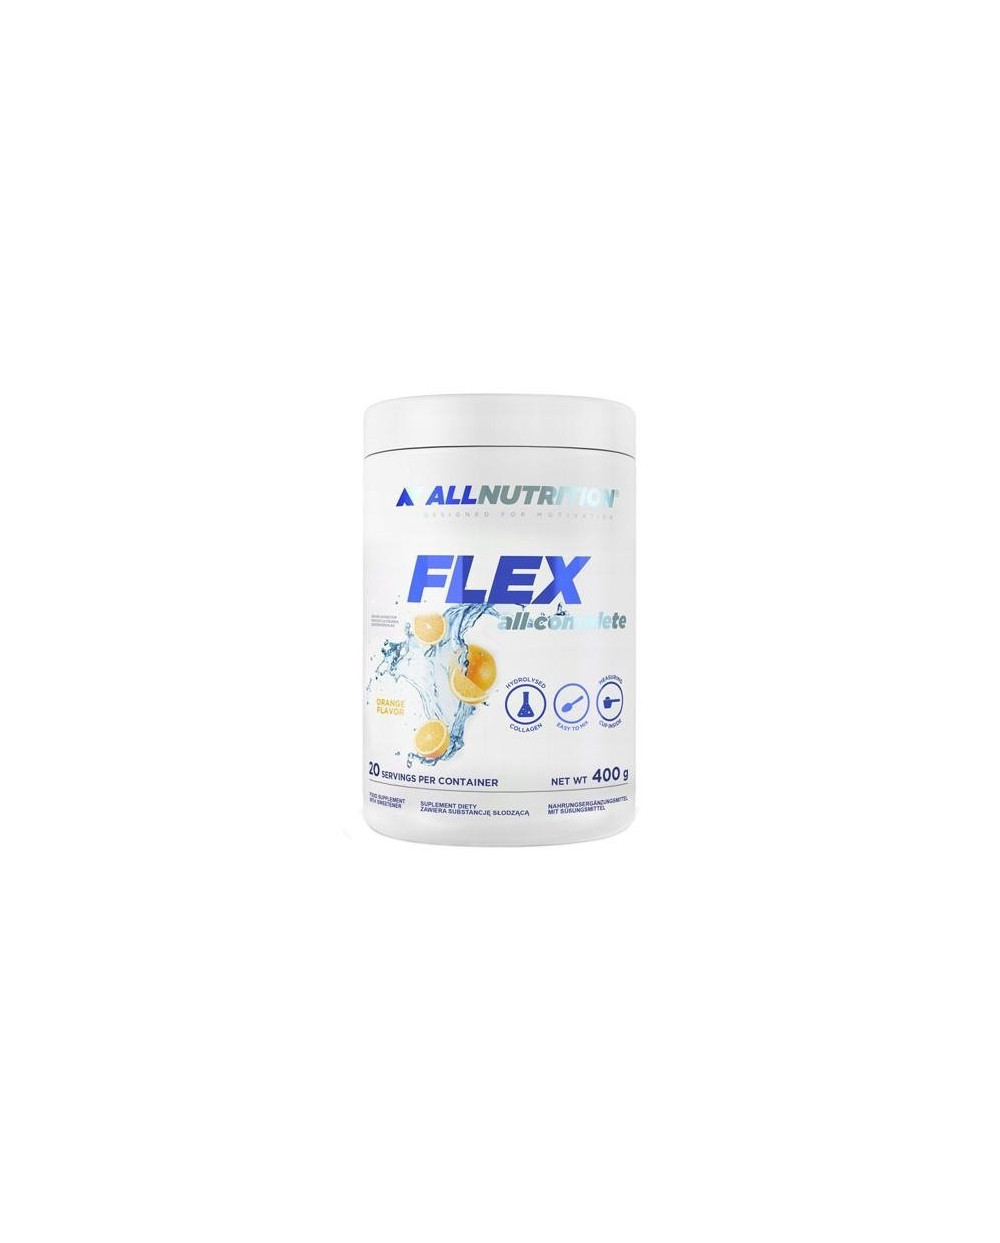 Flex All Complete - 400 грама - портокал